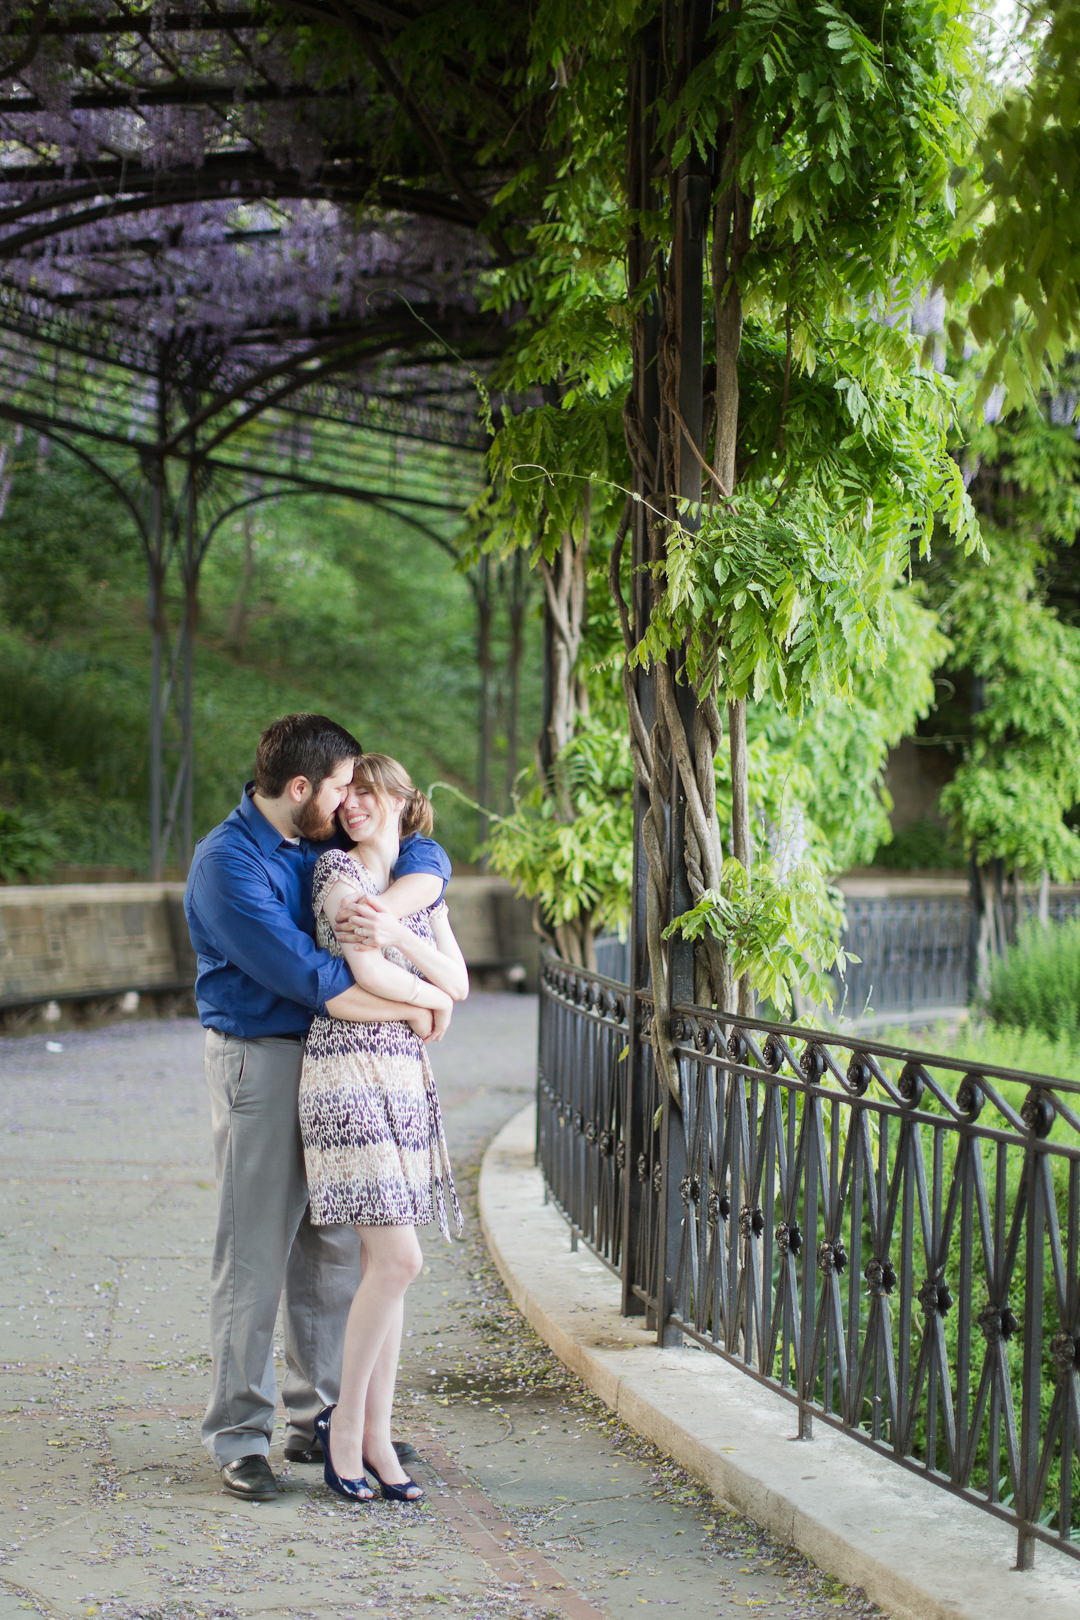 Melissa Kruse Photography - Danielle & Douglas Central Park Conservatory Garden Engagement Photos-92.jpg